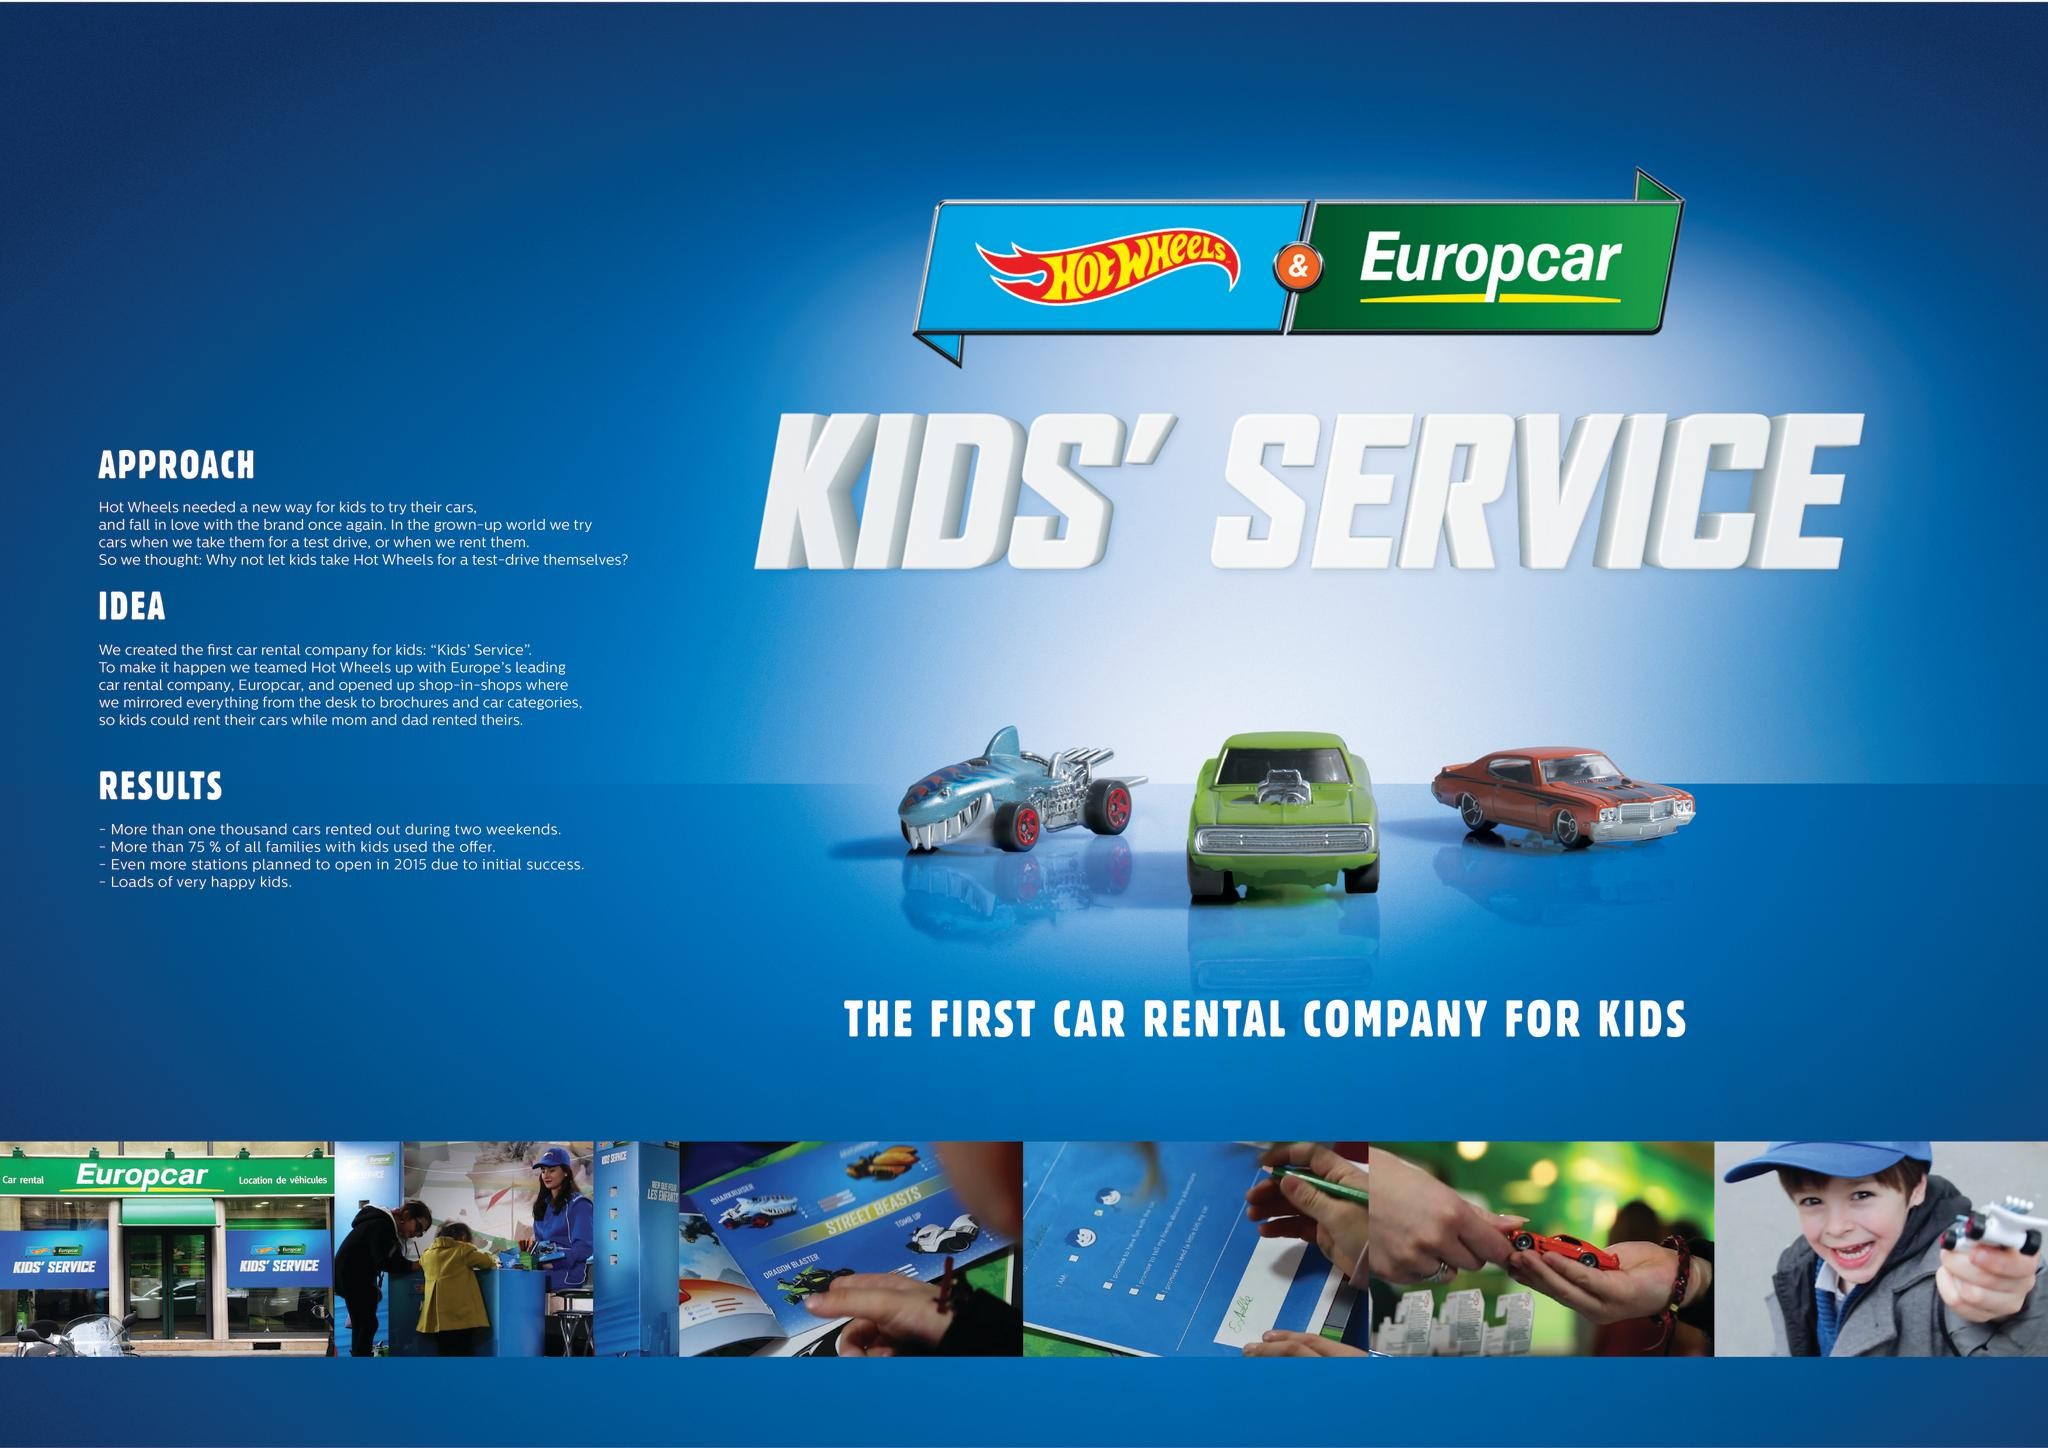 HOT WHEELS & EUROPCAR KIDS’ SERVICE